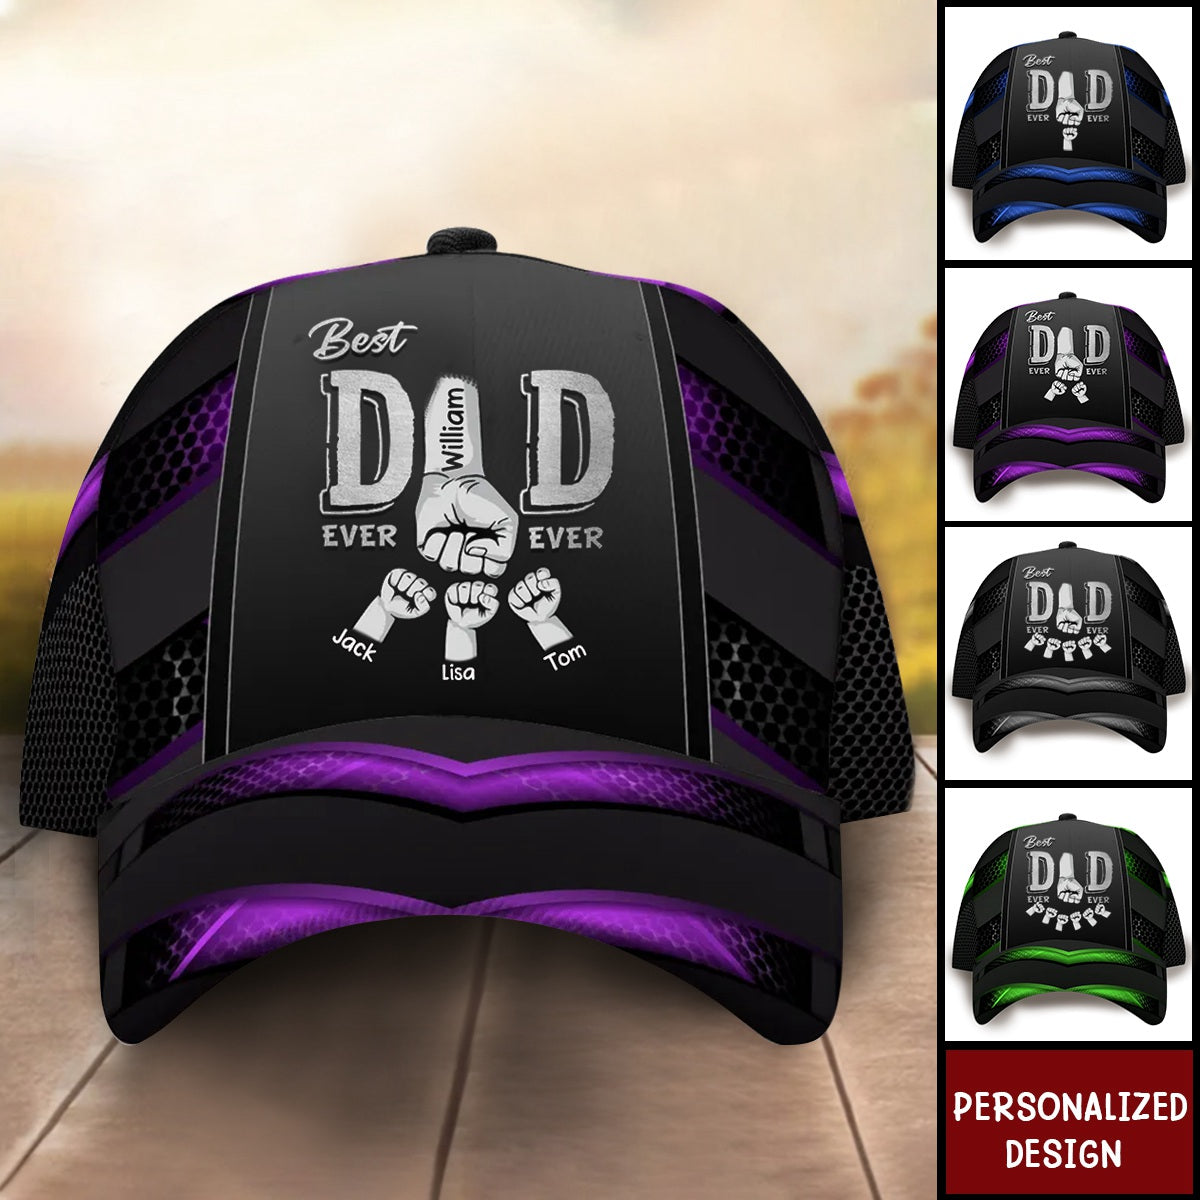 Best Dad Ever Fist Bump Personalized Classic Cap